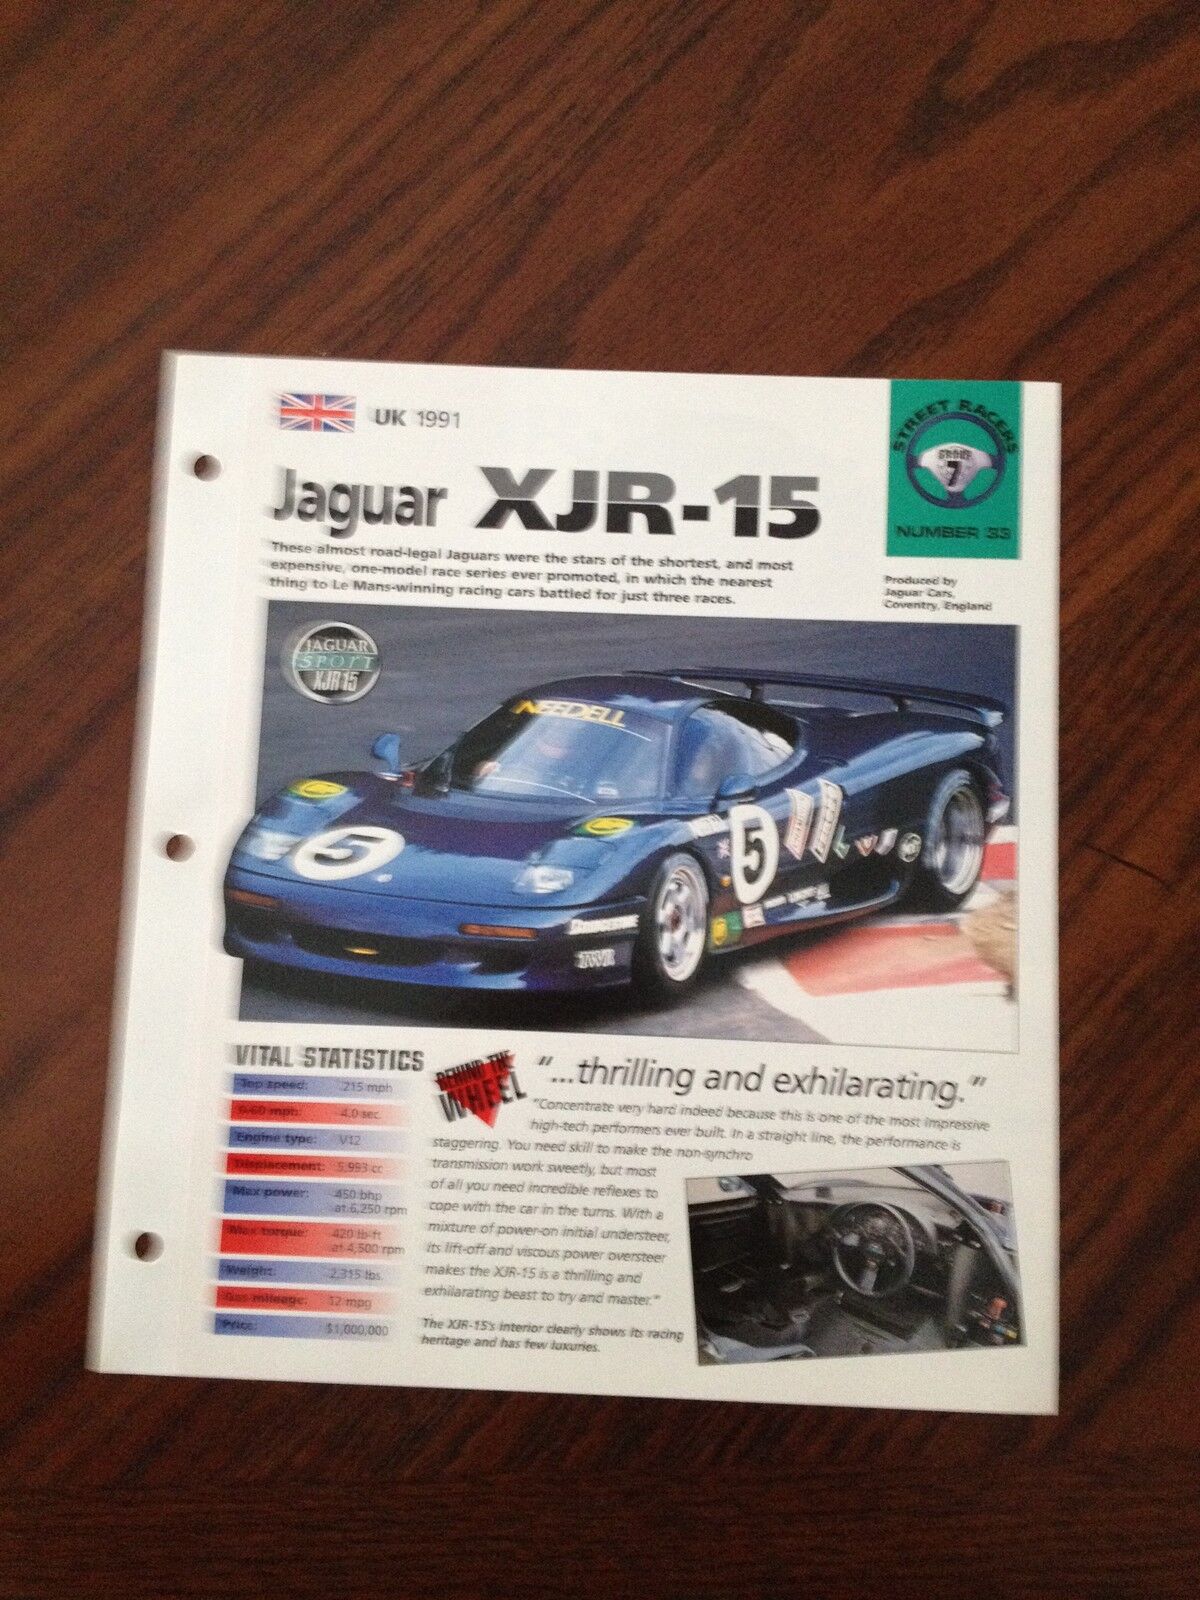 UK 1991 Jaguar XJR-15 Hot Cars Street Racers Group 7 # 33 Spec Sheet Brochure